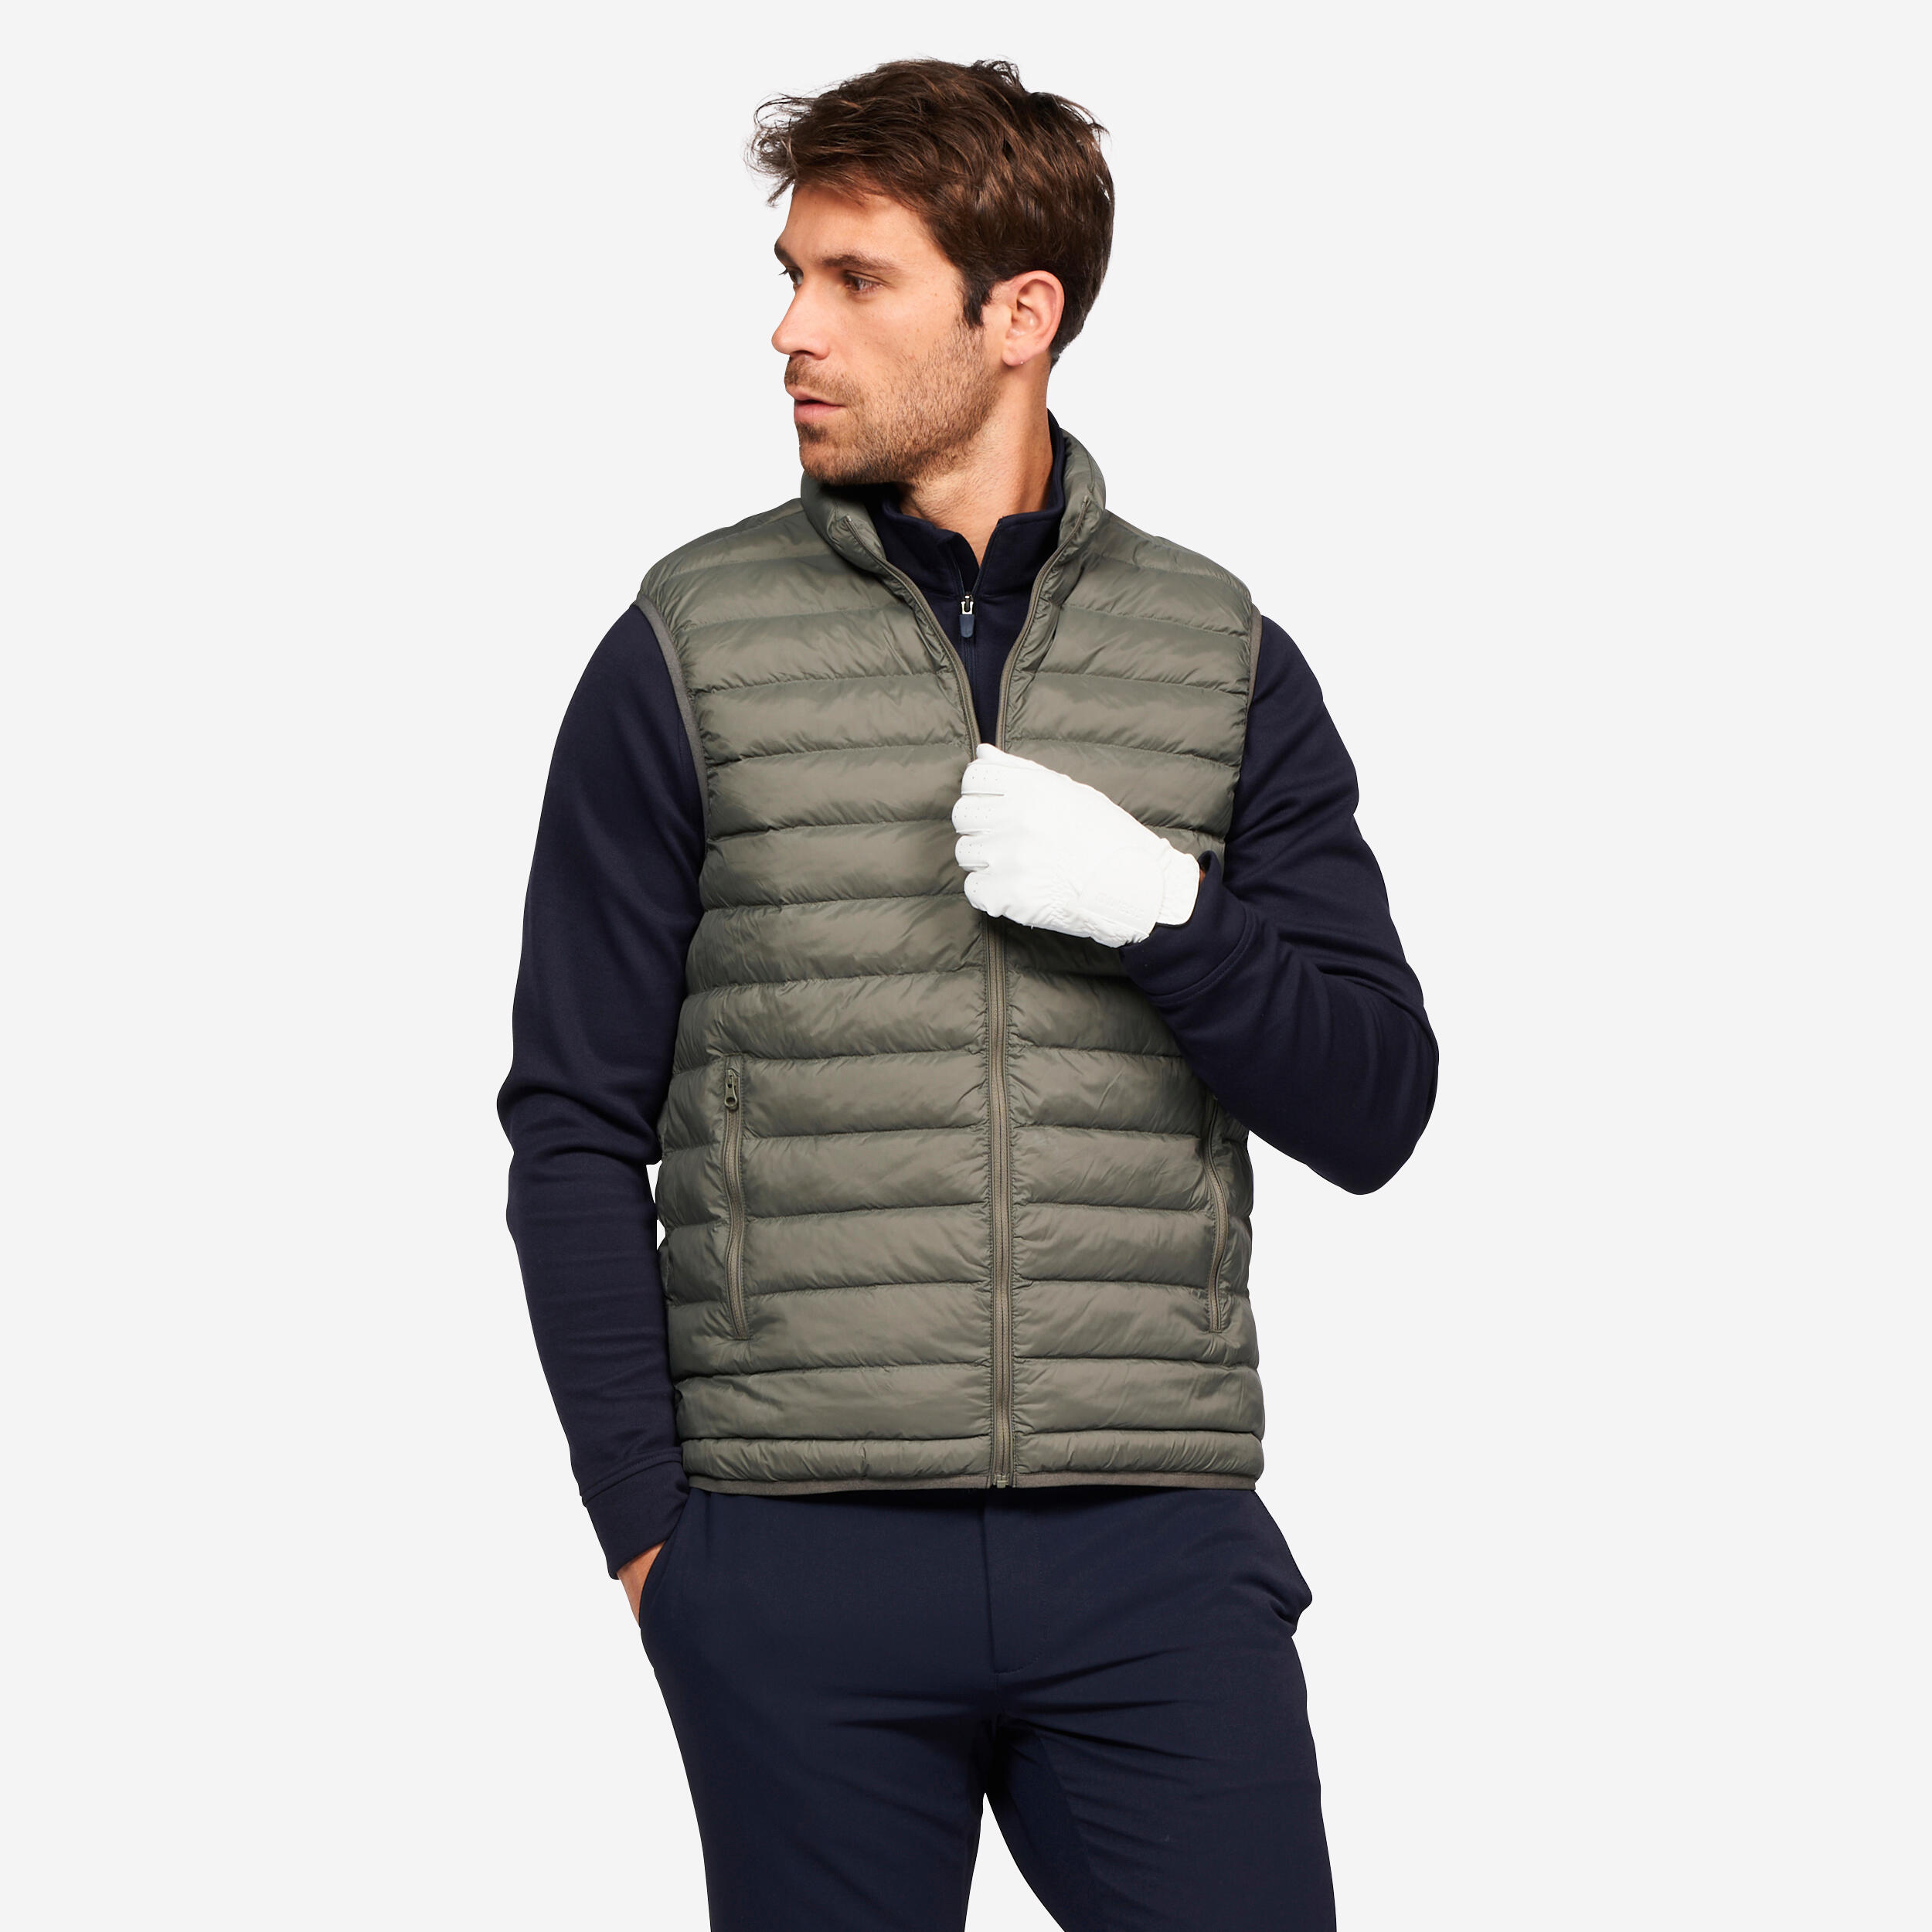 Men's golf sleeveless down jacket - MW500 khaki 6/8